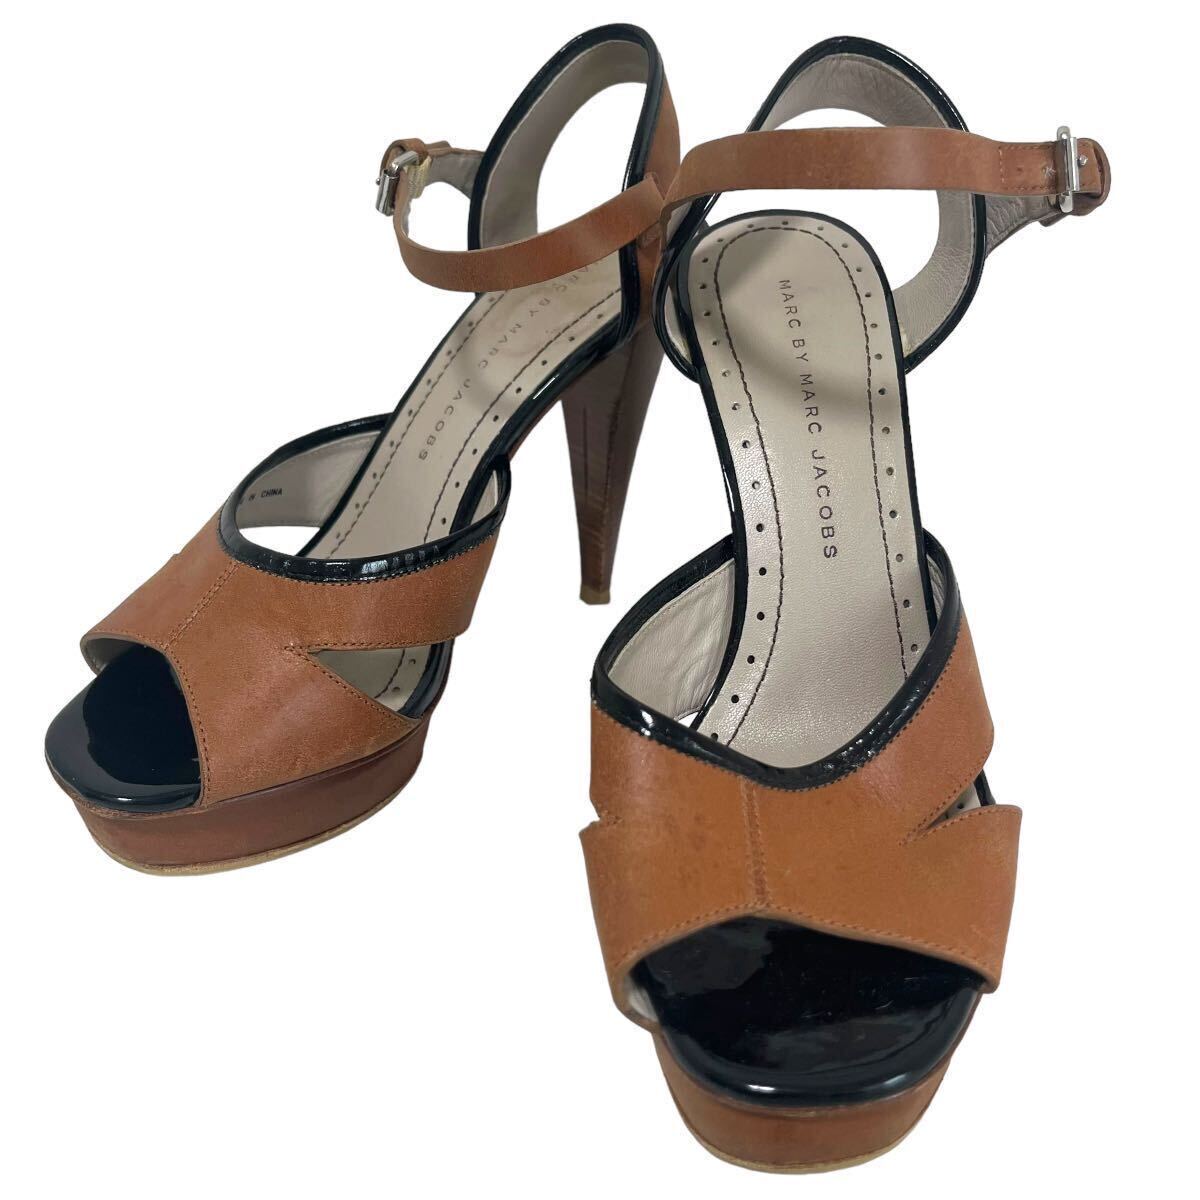 MARC BY MARC JACOBS Mark Jacobs leather heel sandals open tu pin heel strap Brown 36 half (23~23.5cm corresponding )